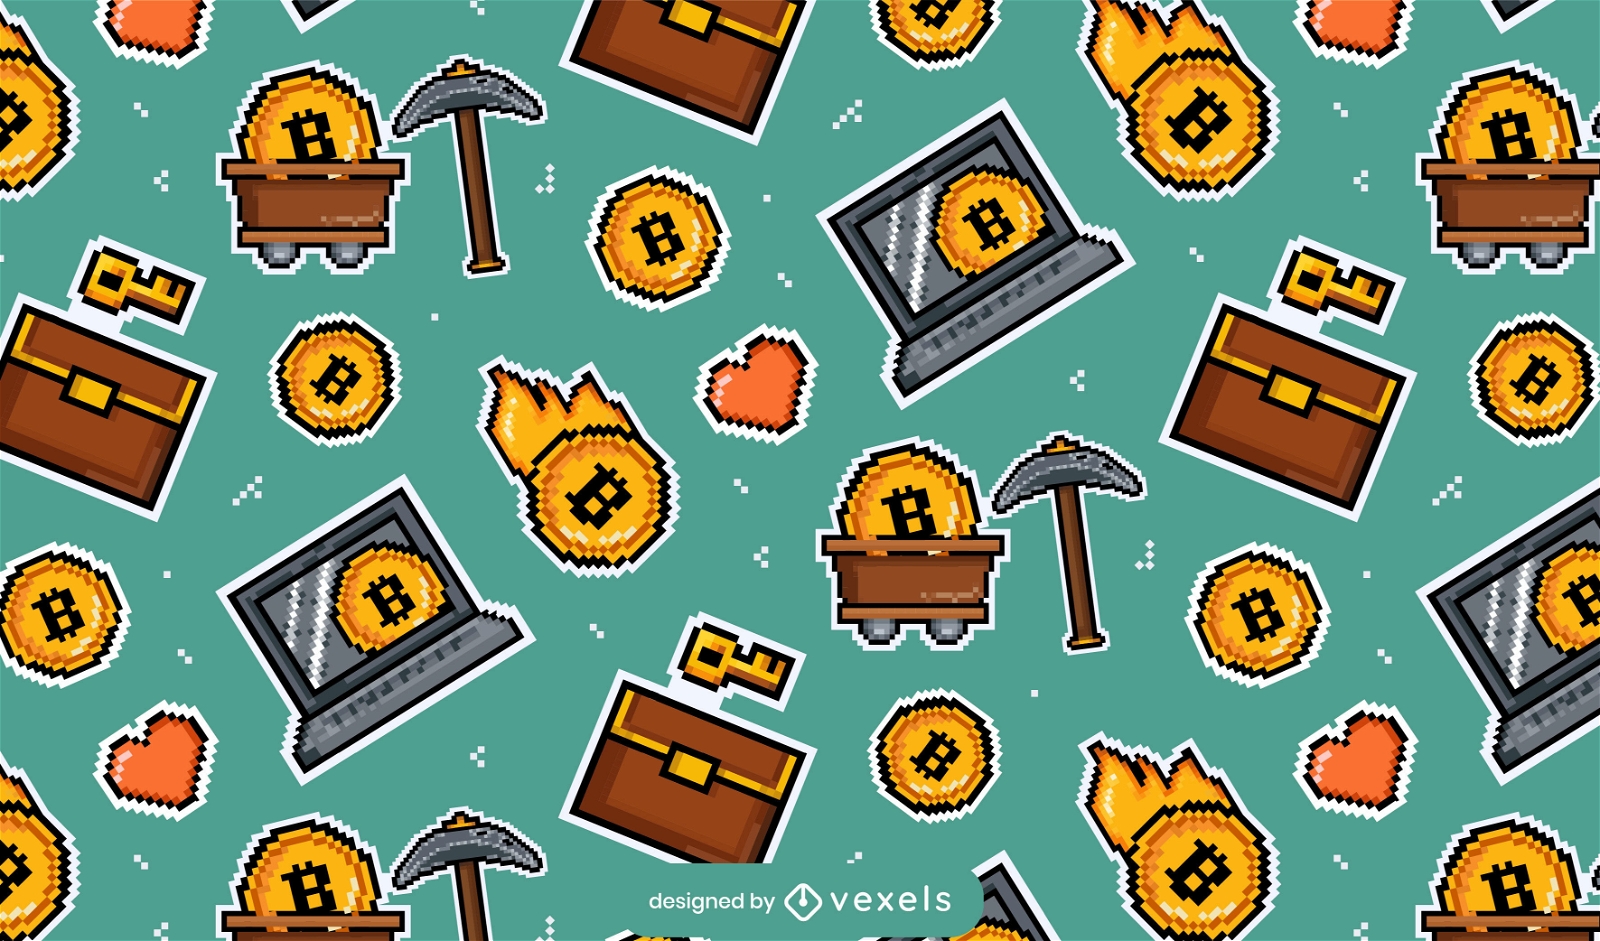 Bitcoin elements pixel art pattern